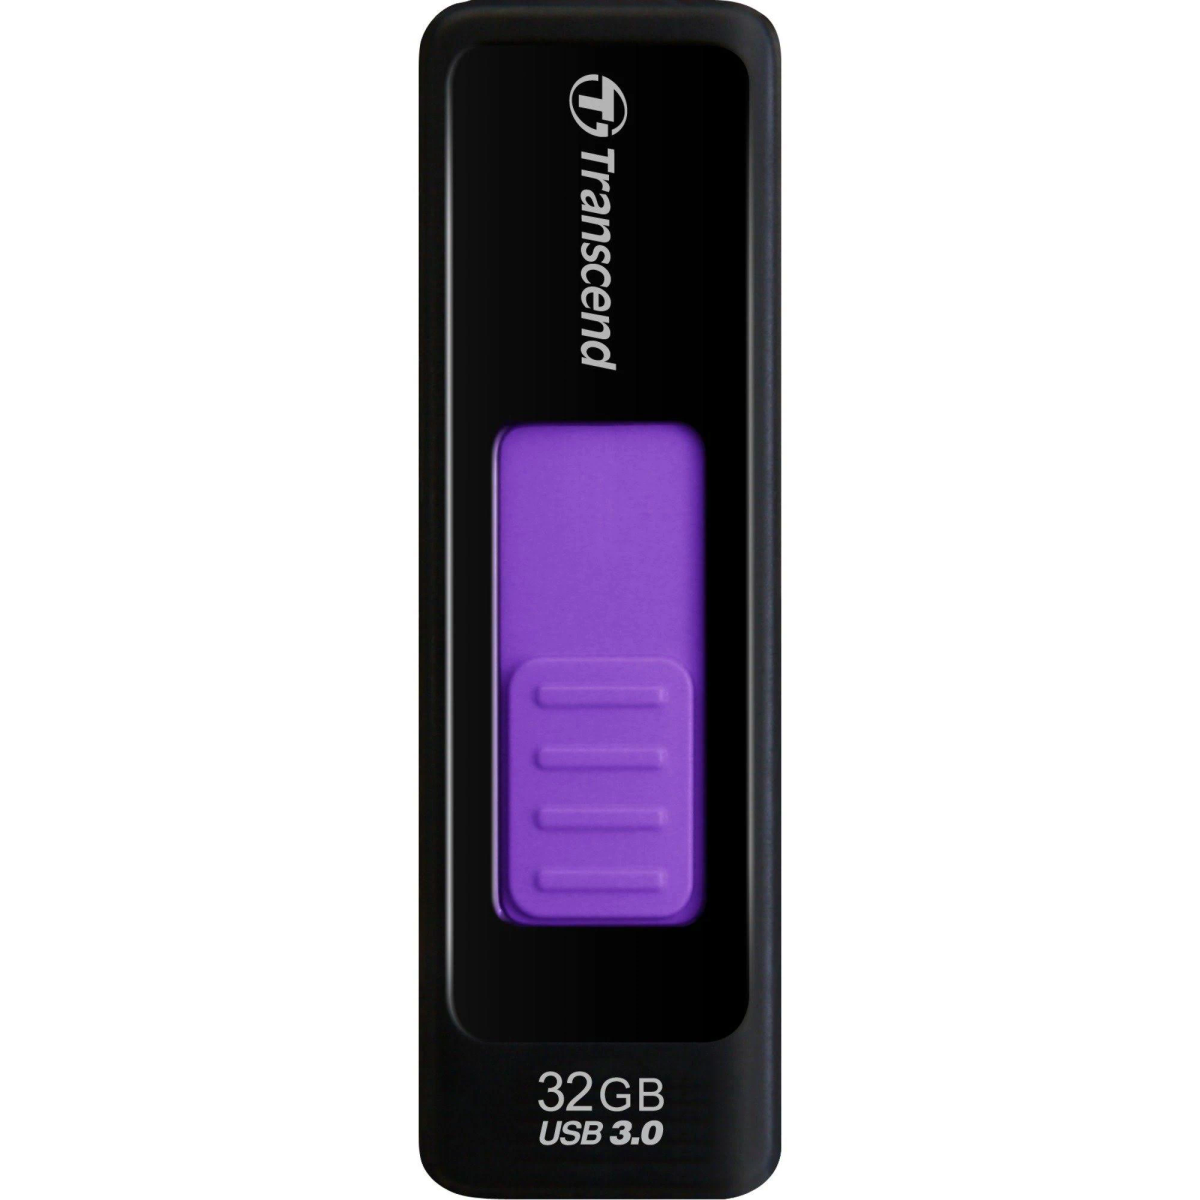 GB) 3.0 32GB TRANSCEND JetFlash STICK 32 USB-Flash-Laufwerk black Transcend 760 (Schwarz,